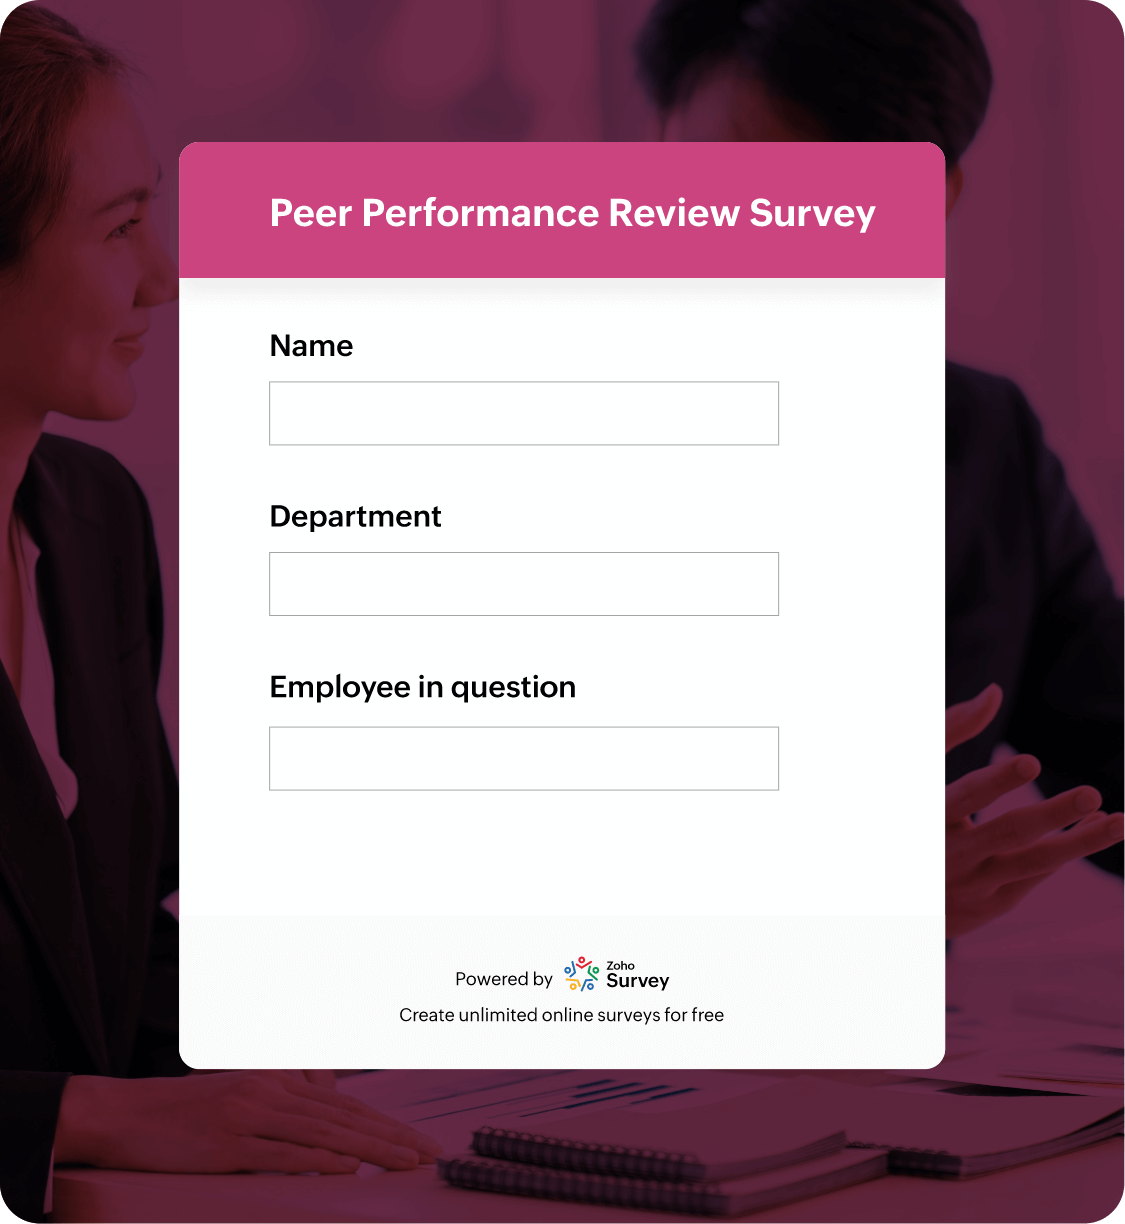 Peer performance review survey questionnaire template